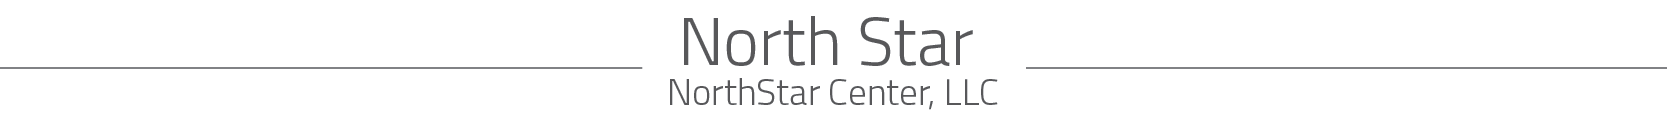 Master Planning Architecture Design For NorthStar Center, LLC